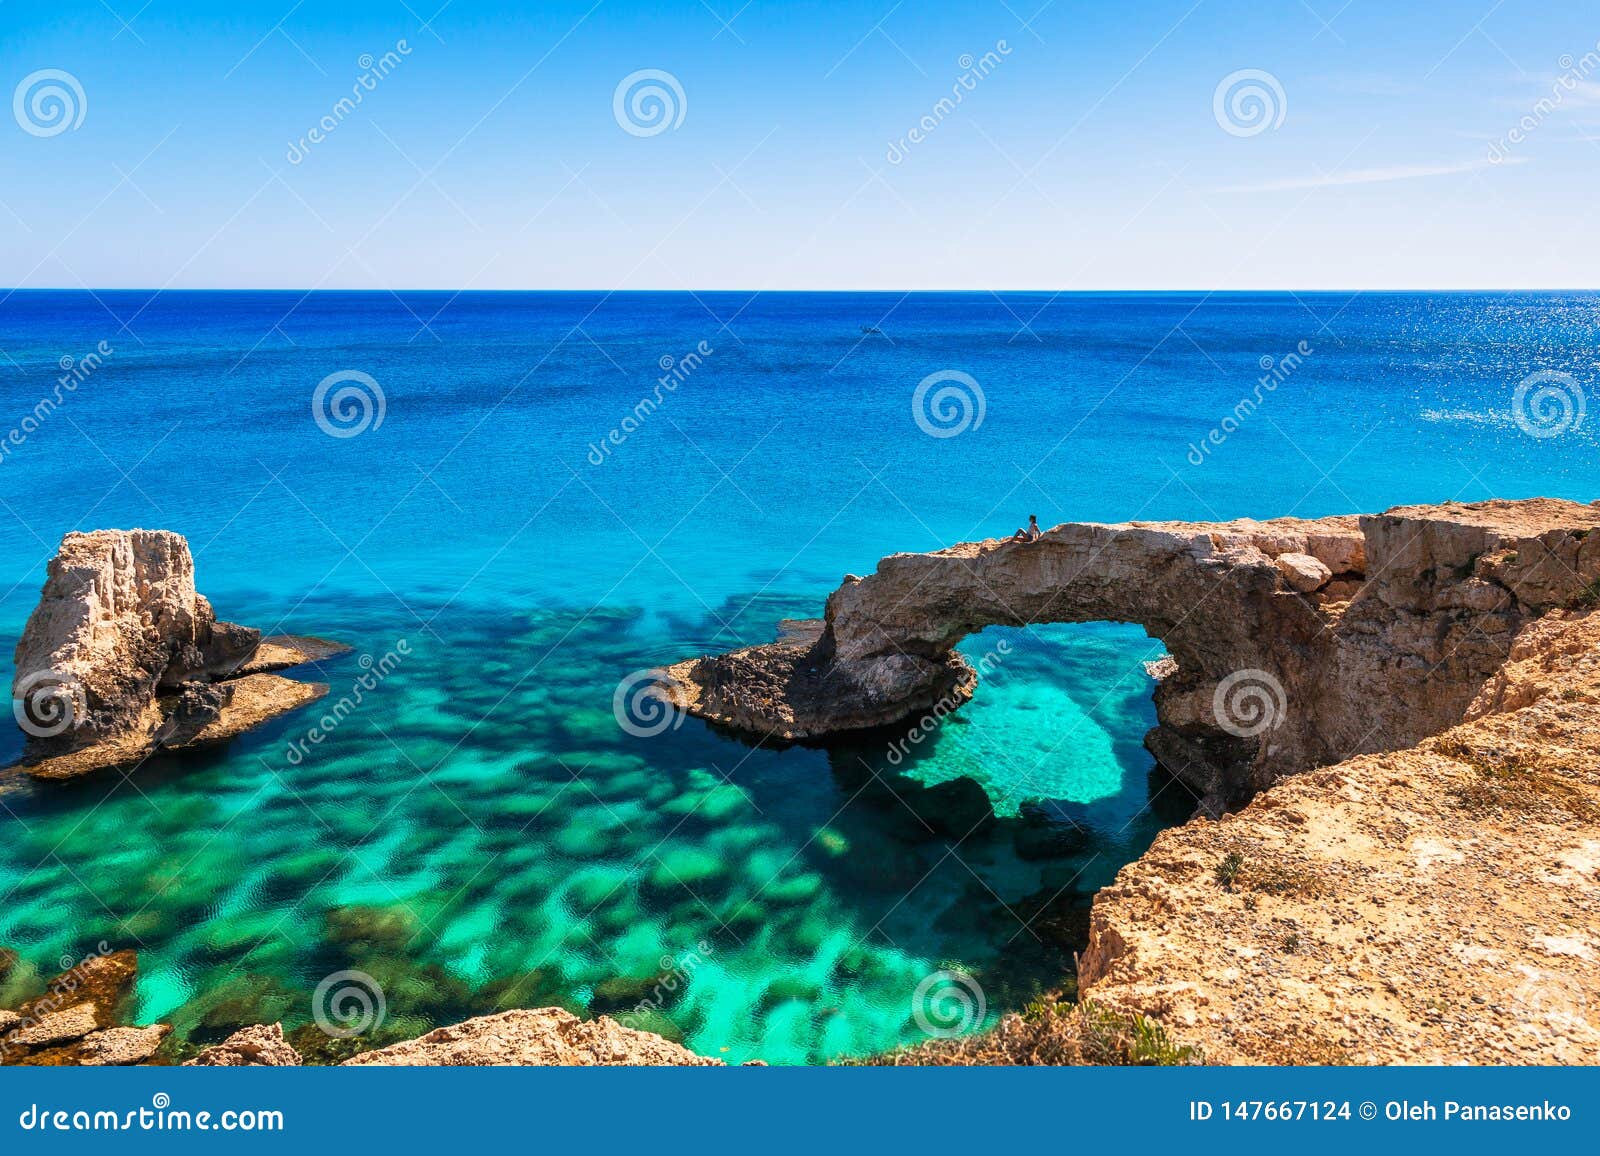 woman on the beautiful natural rock arch near of ayia napa, cavo greco and protaras on cyprus island, mediterranean sea. legendary